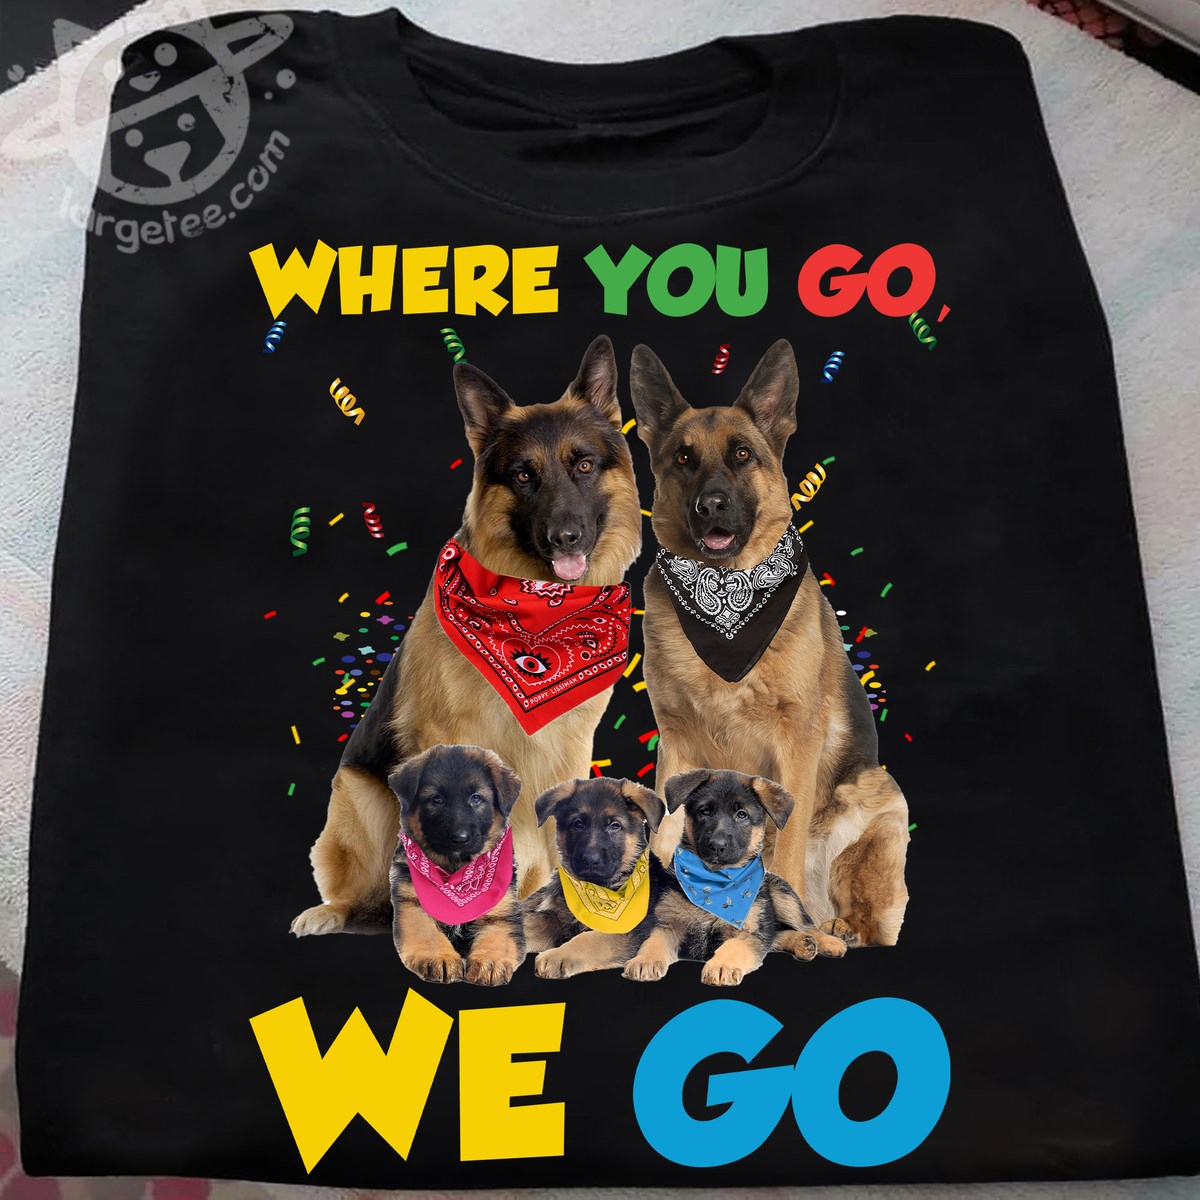 Where you go we go - German shepherd dog